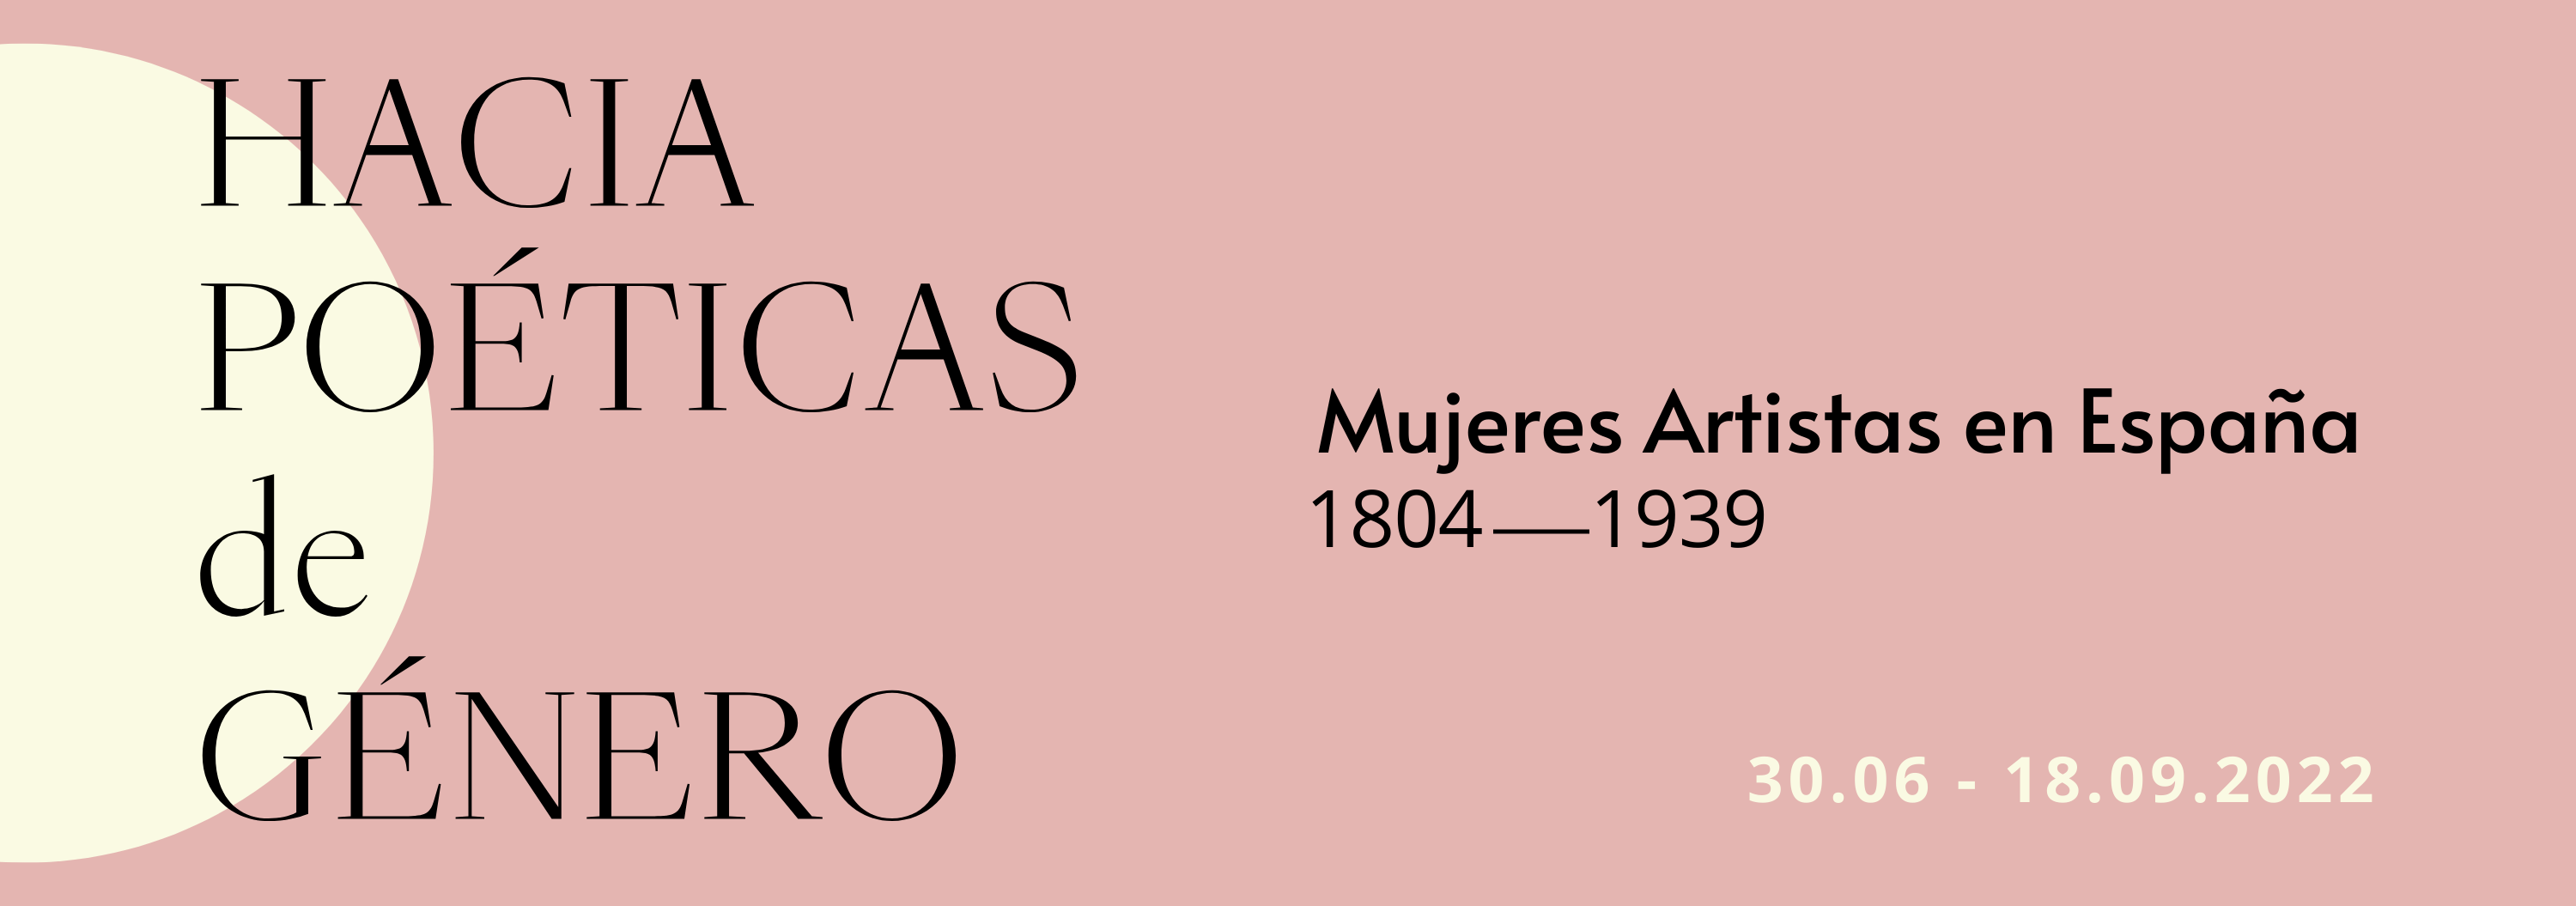 Hacia poéticas de género. Mujeres artistas en España, 1804-1939